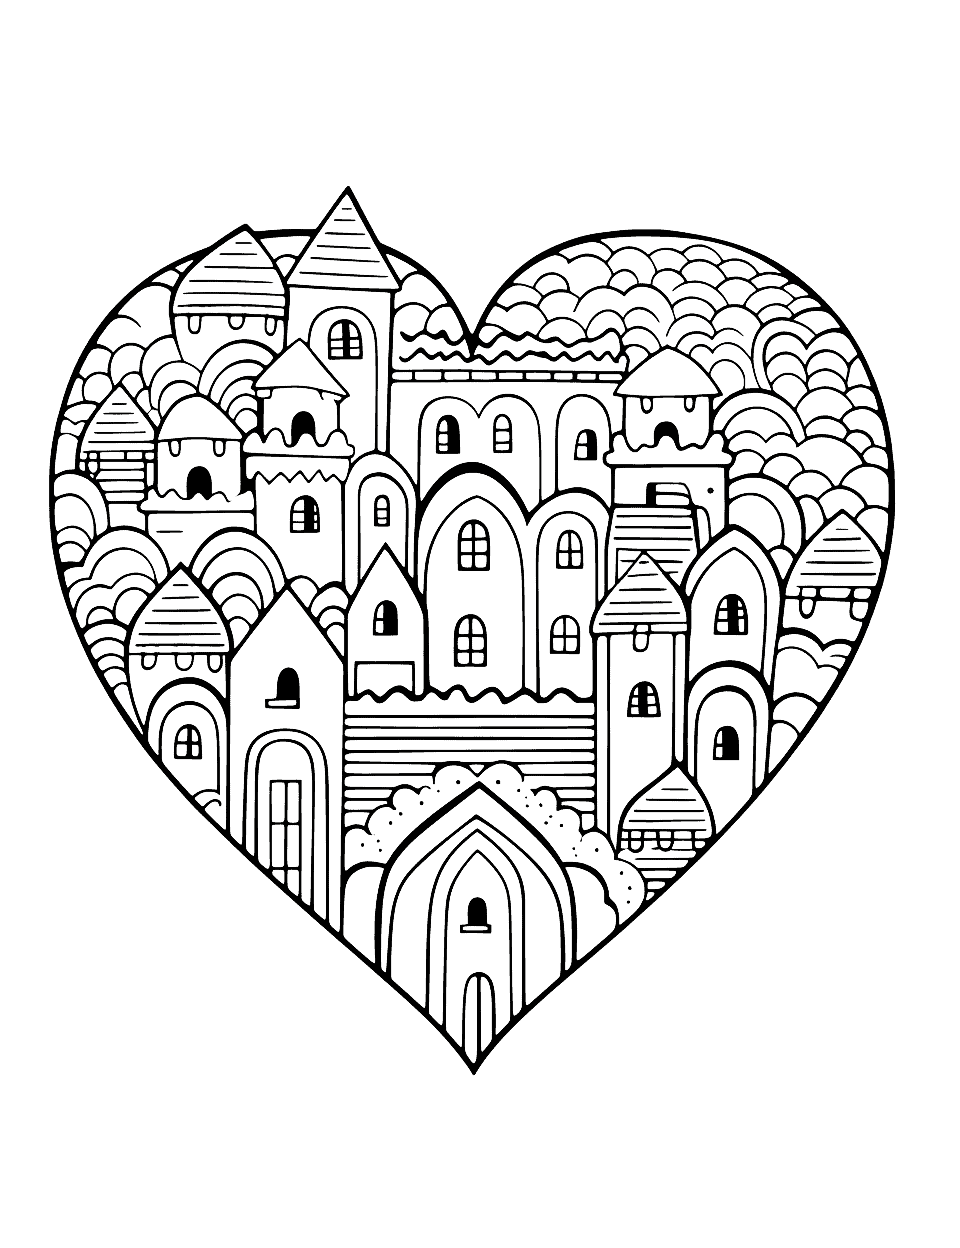 Heart Castle Coloring Page - A castle built within a heart shape.